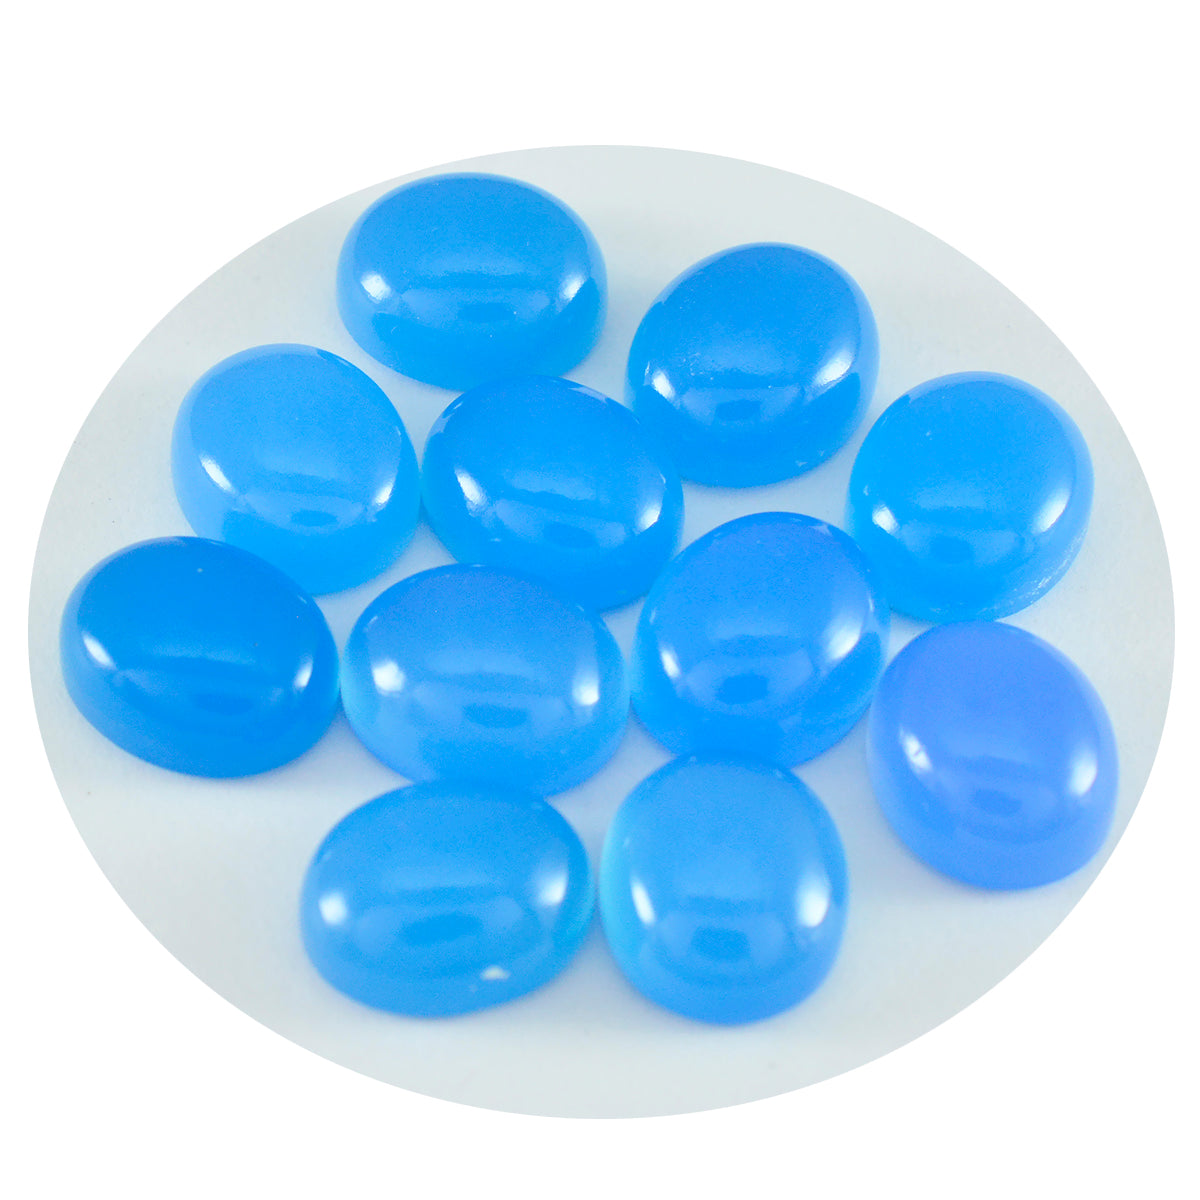 riyogems 1 cabochon di calcedonio blu da 5 x 7 mm di forma ovale, pietra preziosa di qualità sorprendente